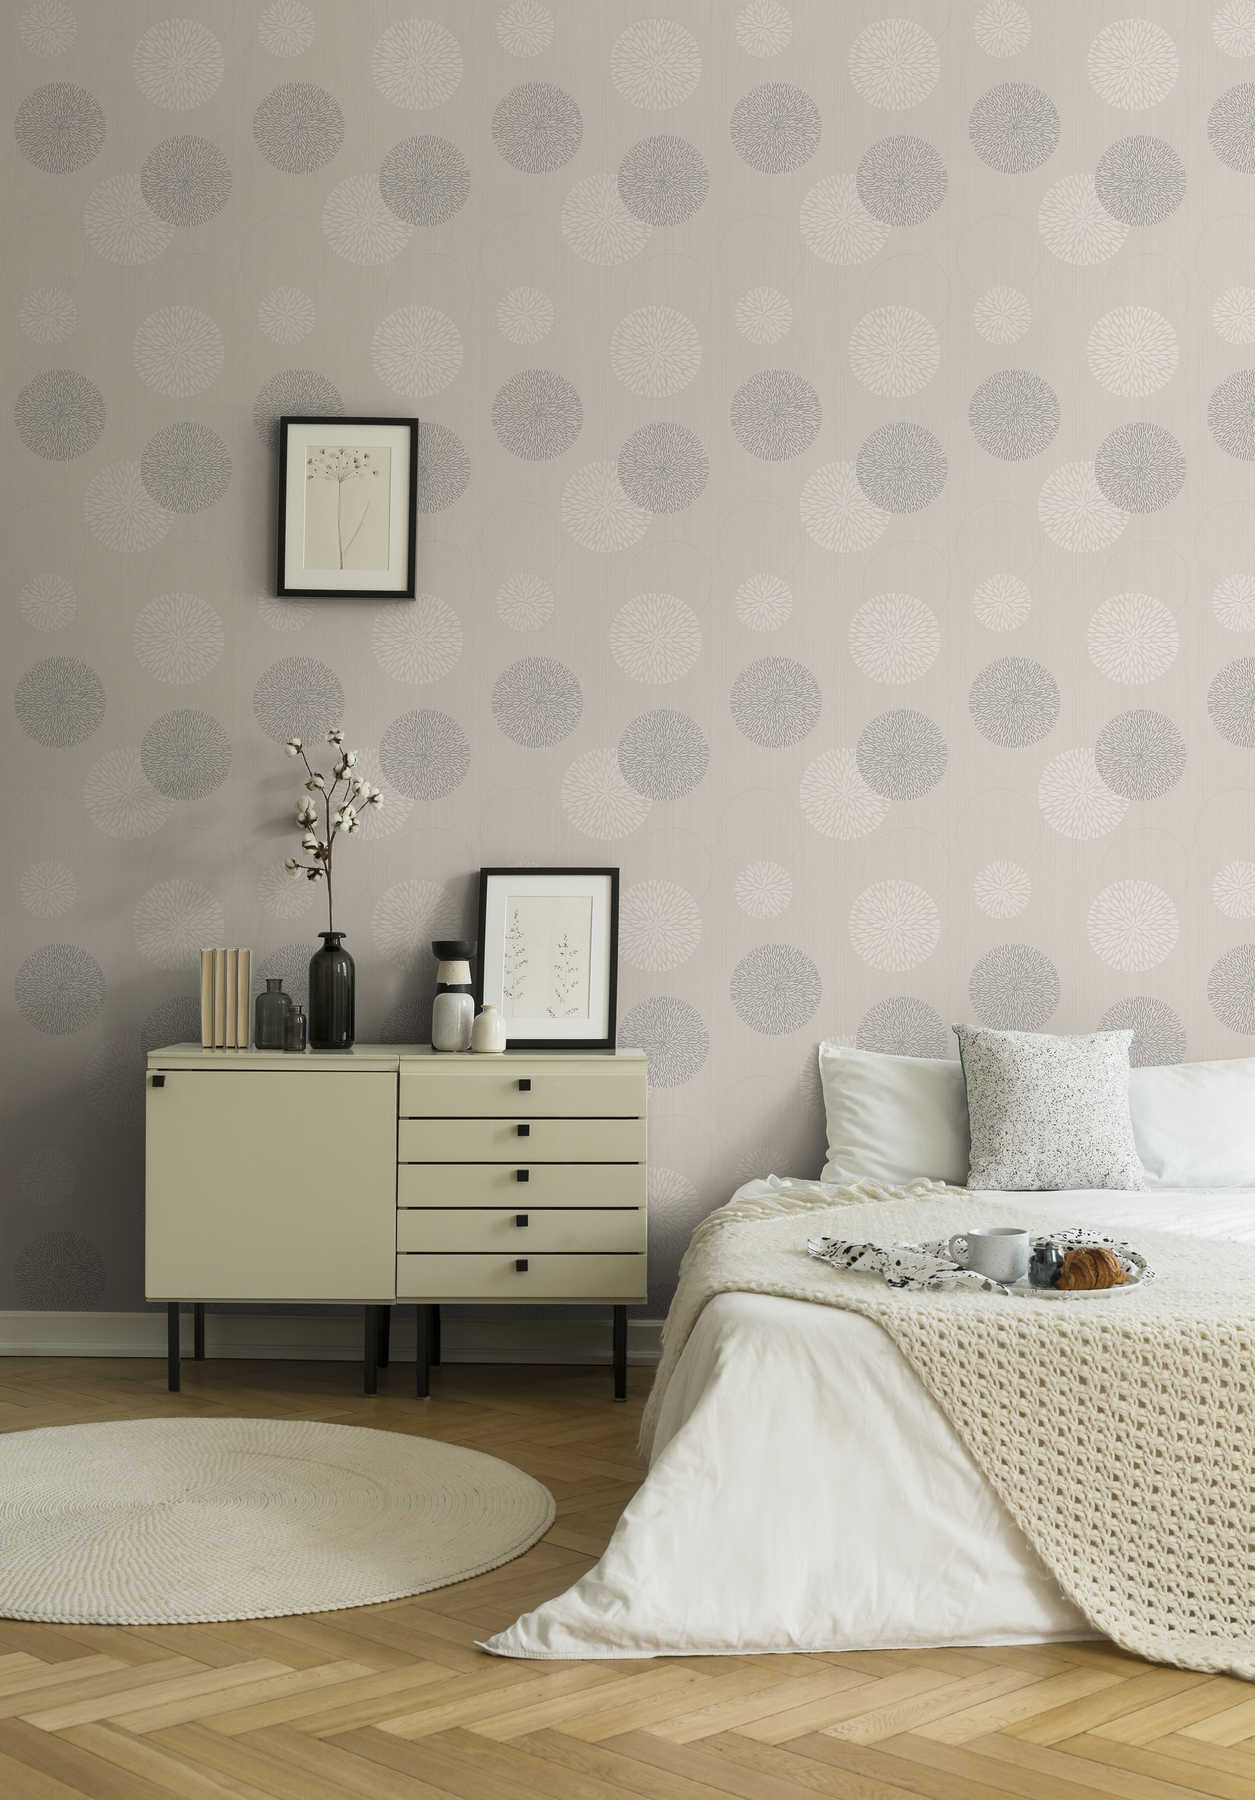             Non-woven wallpaper abstract floral design - beige, metallic
        